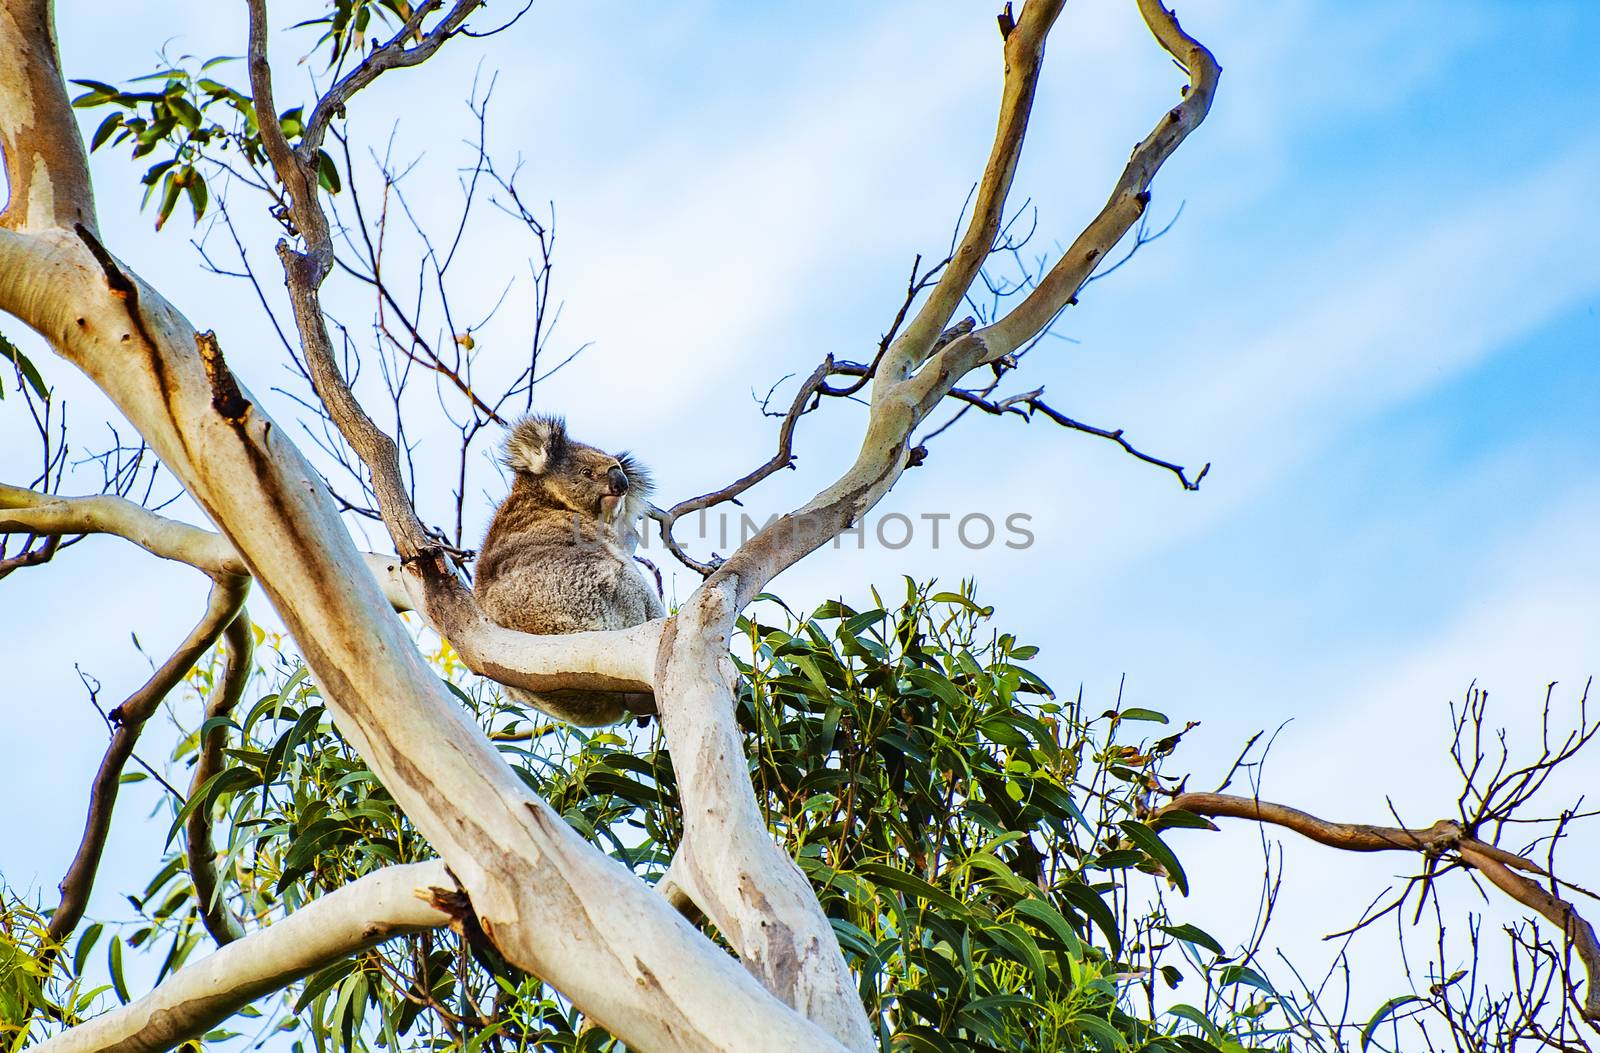 Koala on the gum tree in Australia by fyletto